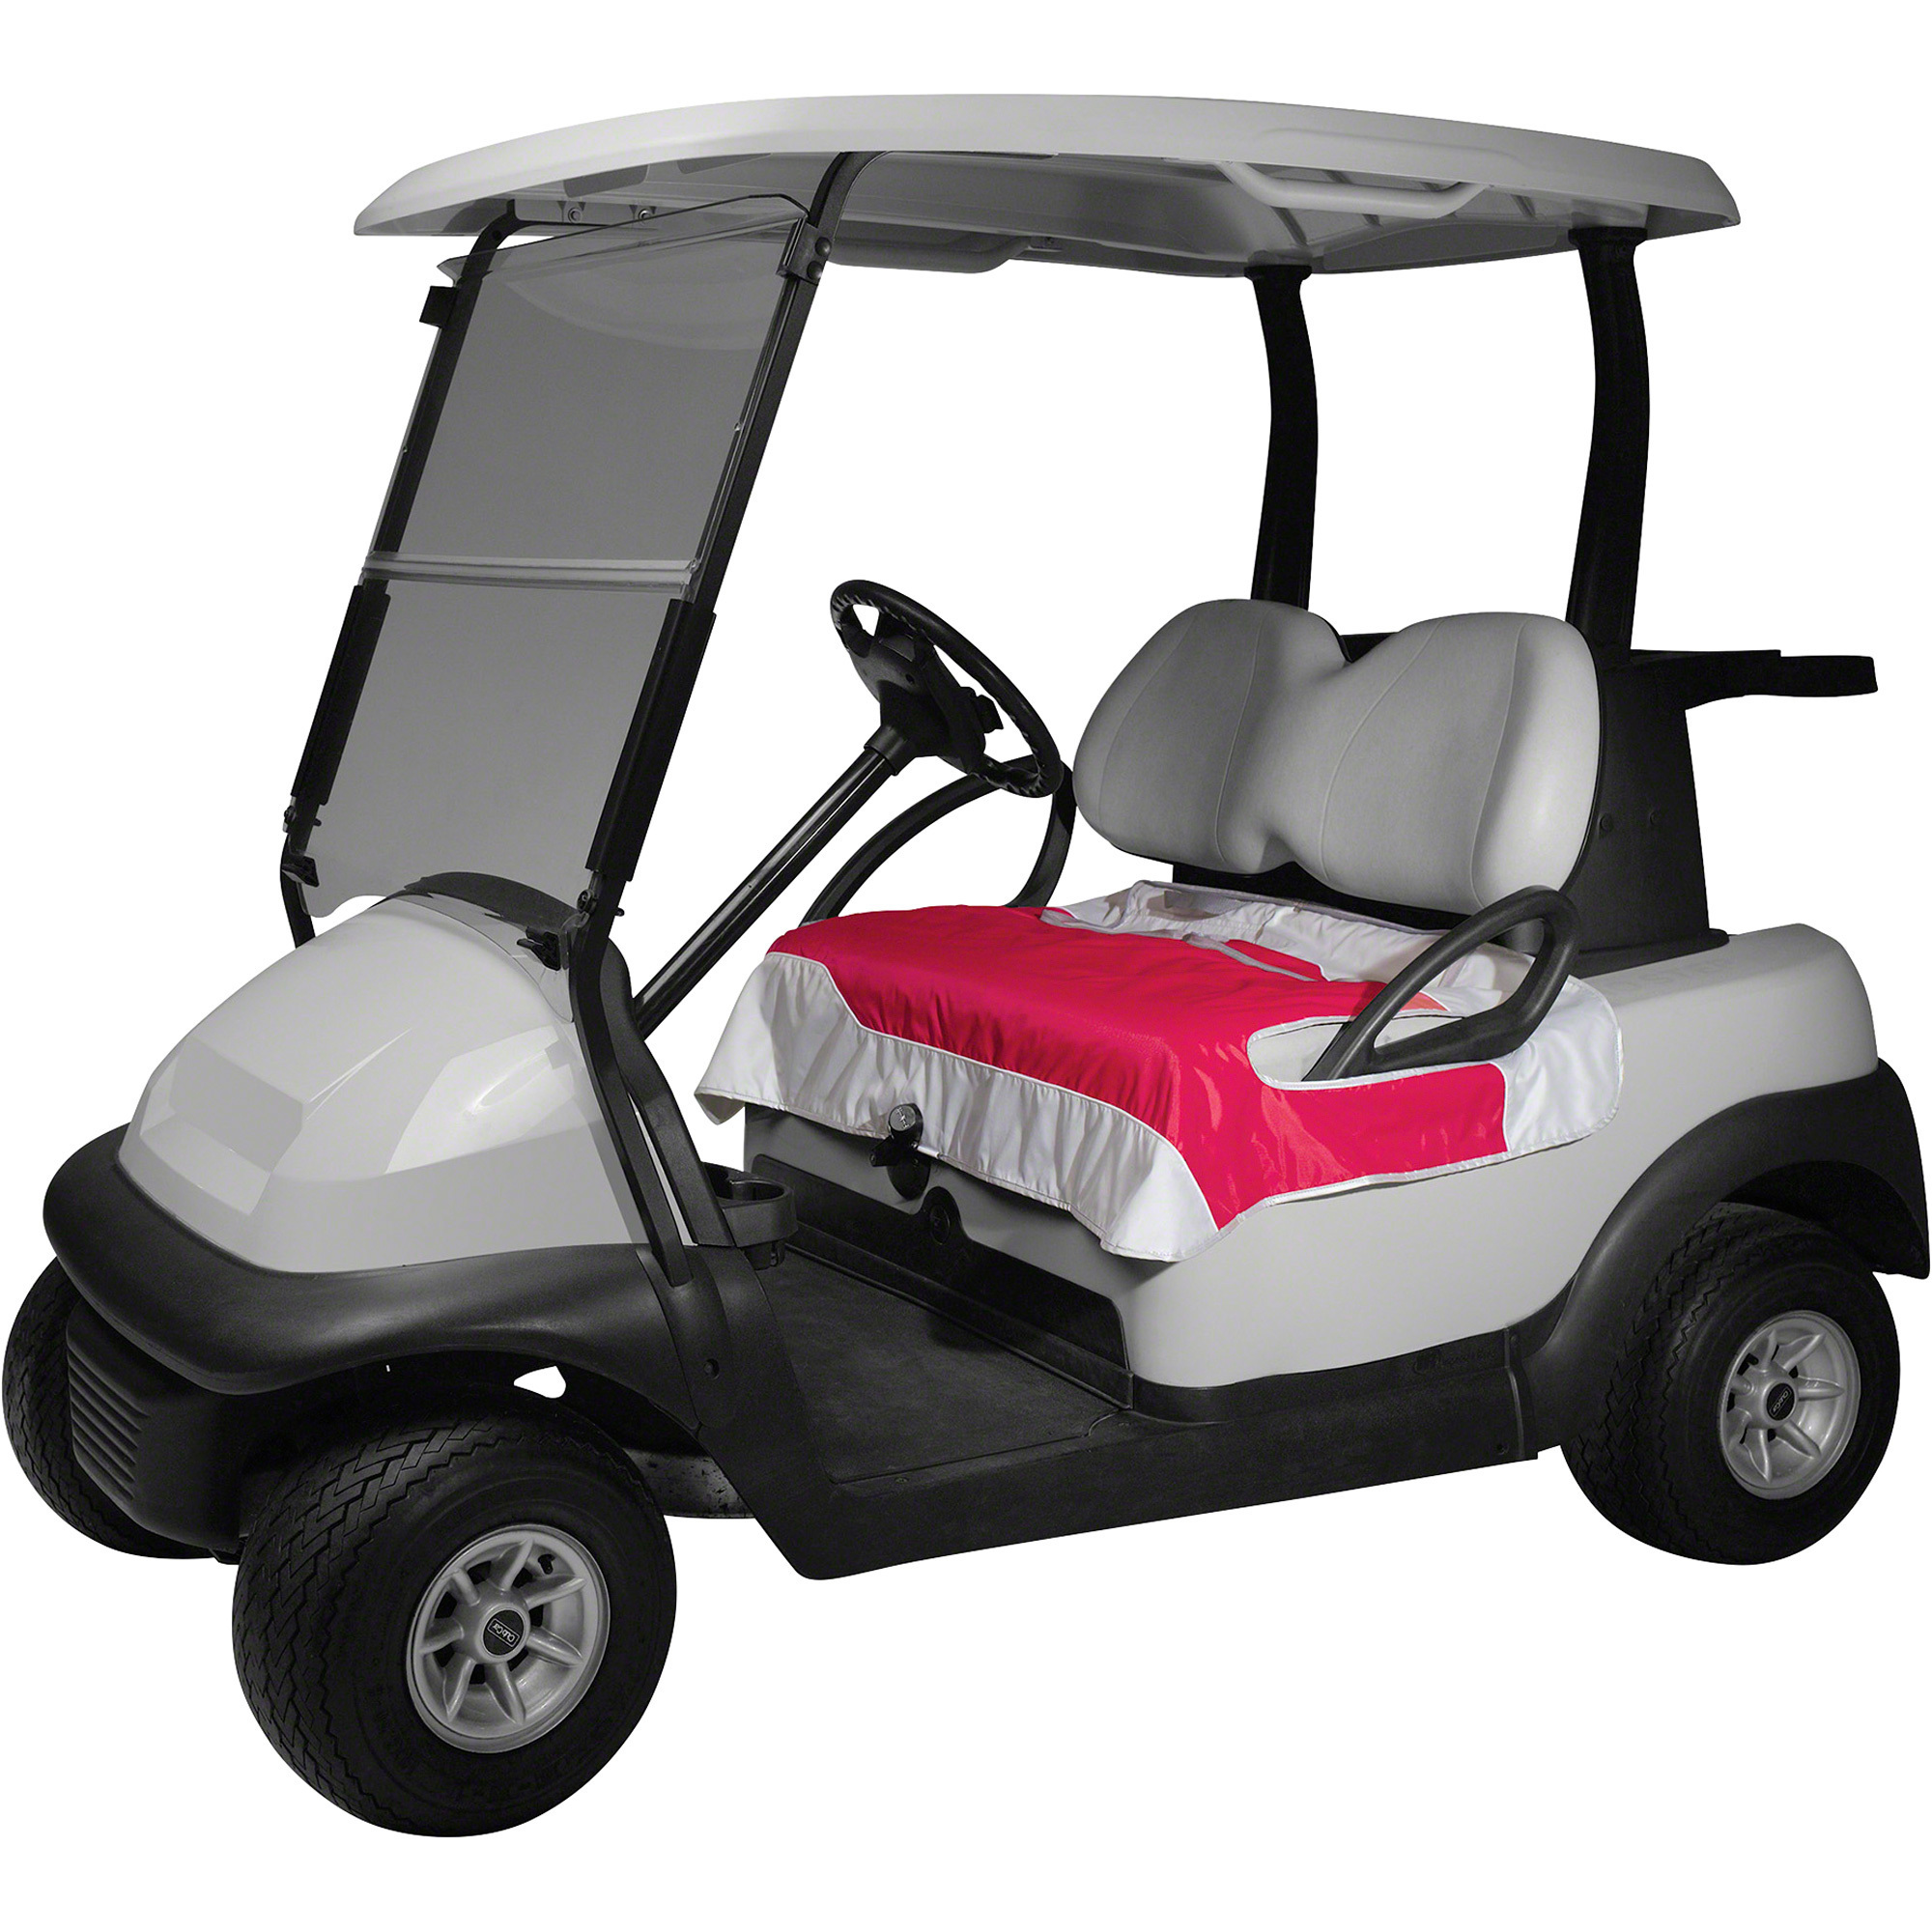 Classic Accessories Fairway Golf Cart Seat Blanket, Pink, Model 40-024-014401-00